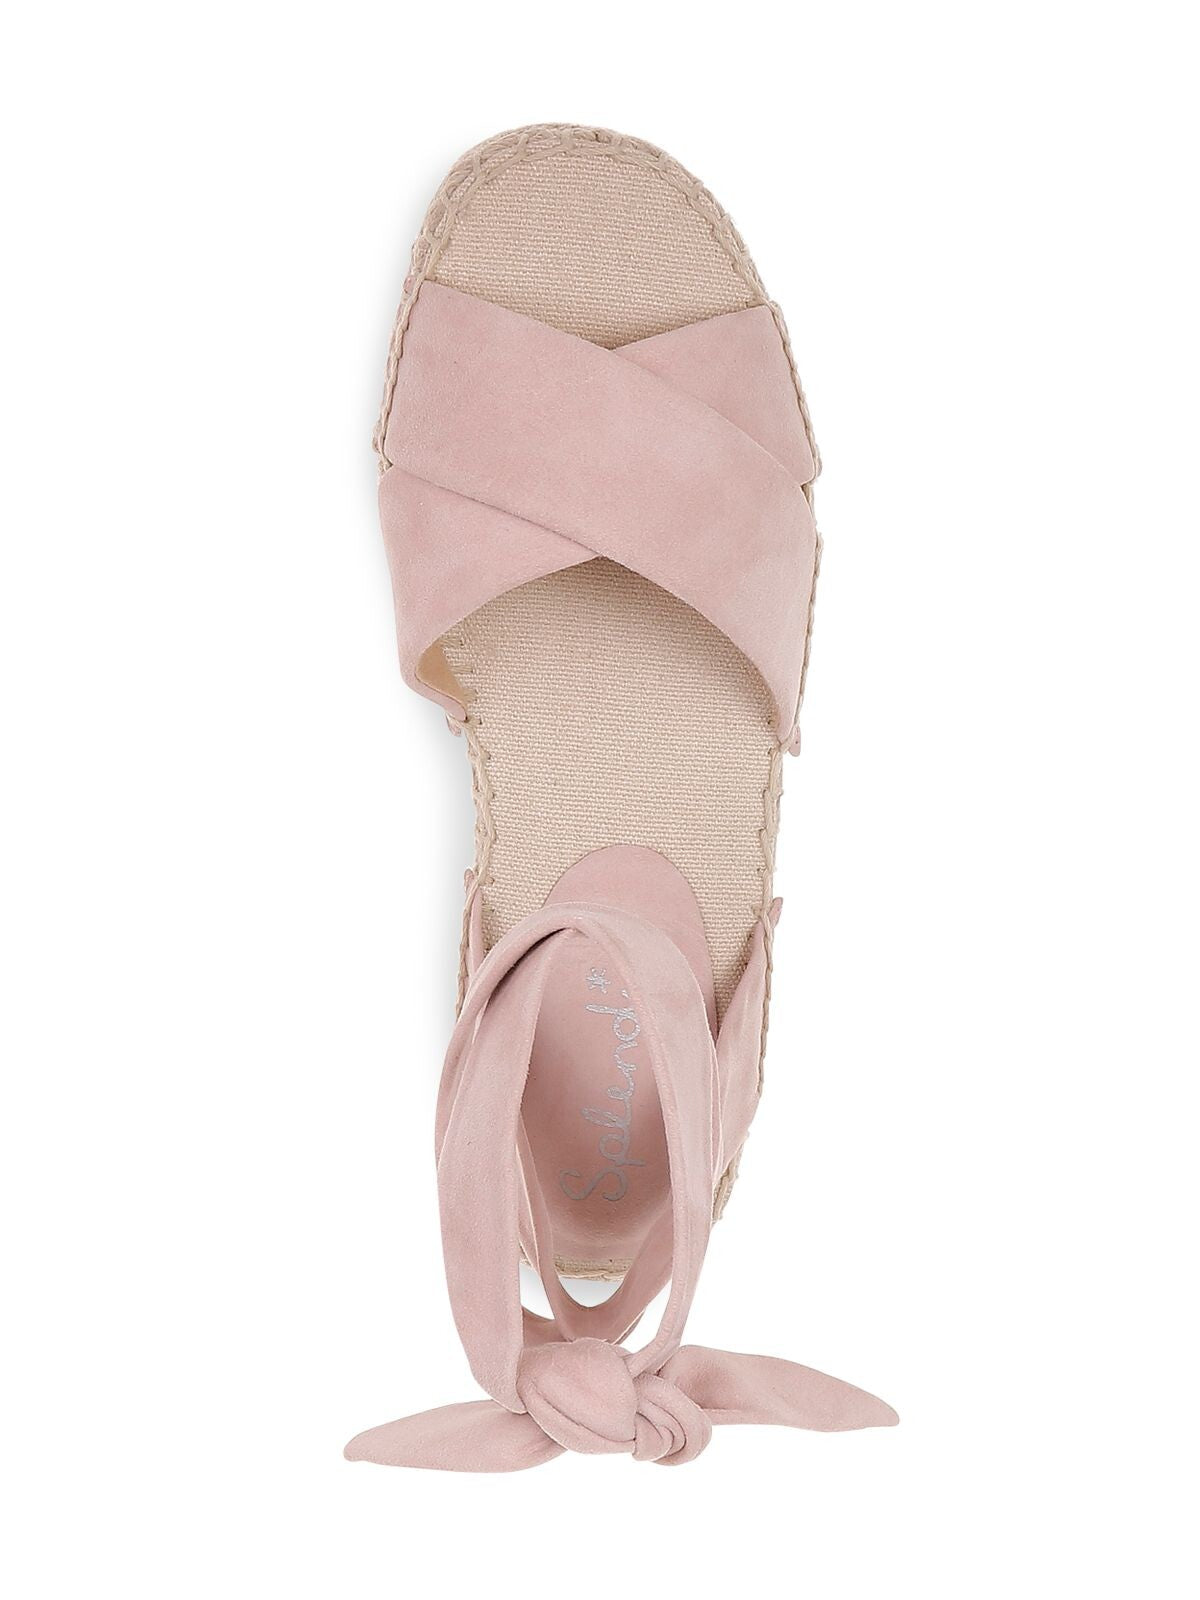 SPLENDID Womens Pink Crisscross Straps Padded Non-Slip Tereza Round Toe Platform Lace-Up Leather Espadrille Shoes 7 M